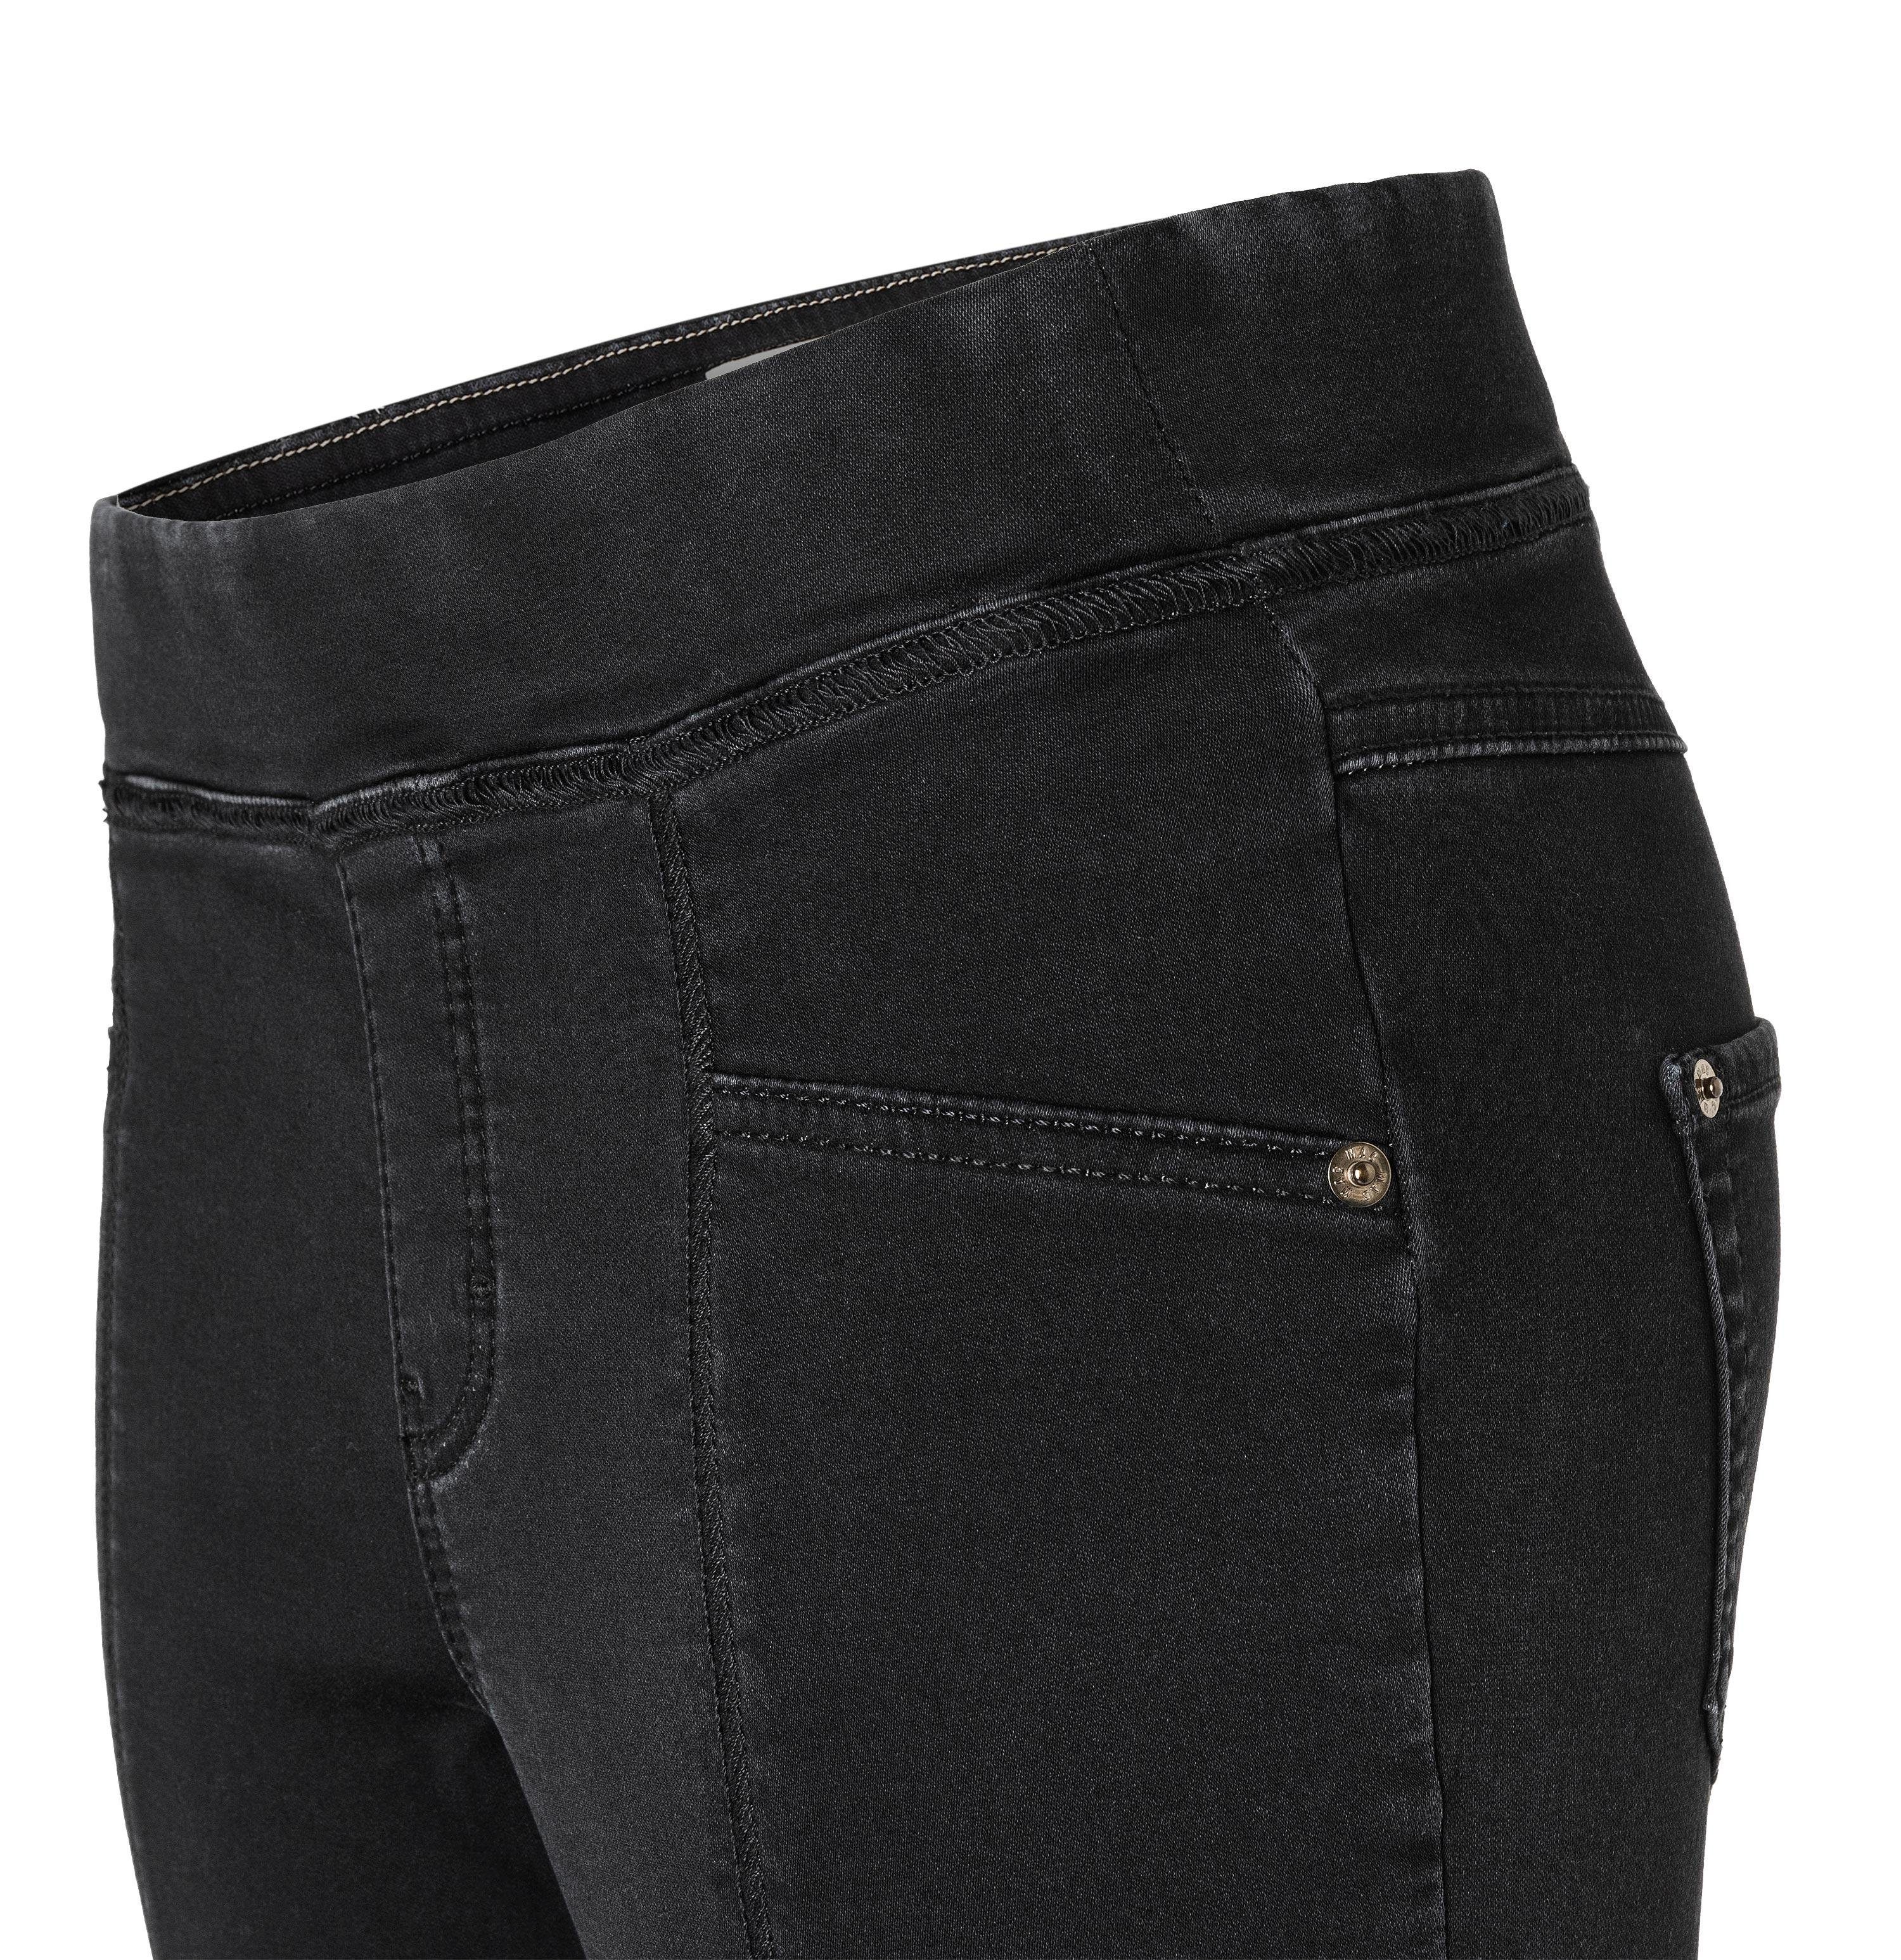 black SOFT rinsewash D991 - LEGGINGS schwarz Stretch-Jeans ISKO™ DENIM MAC 5907-90-0350 cosy MAC